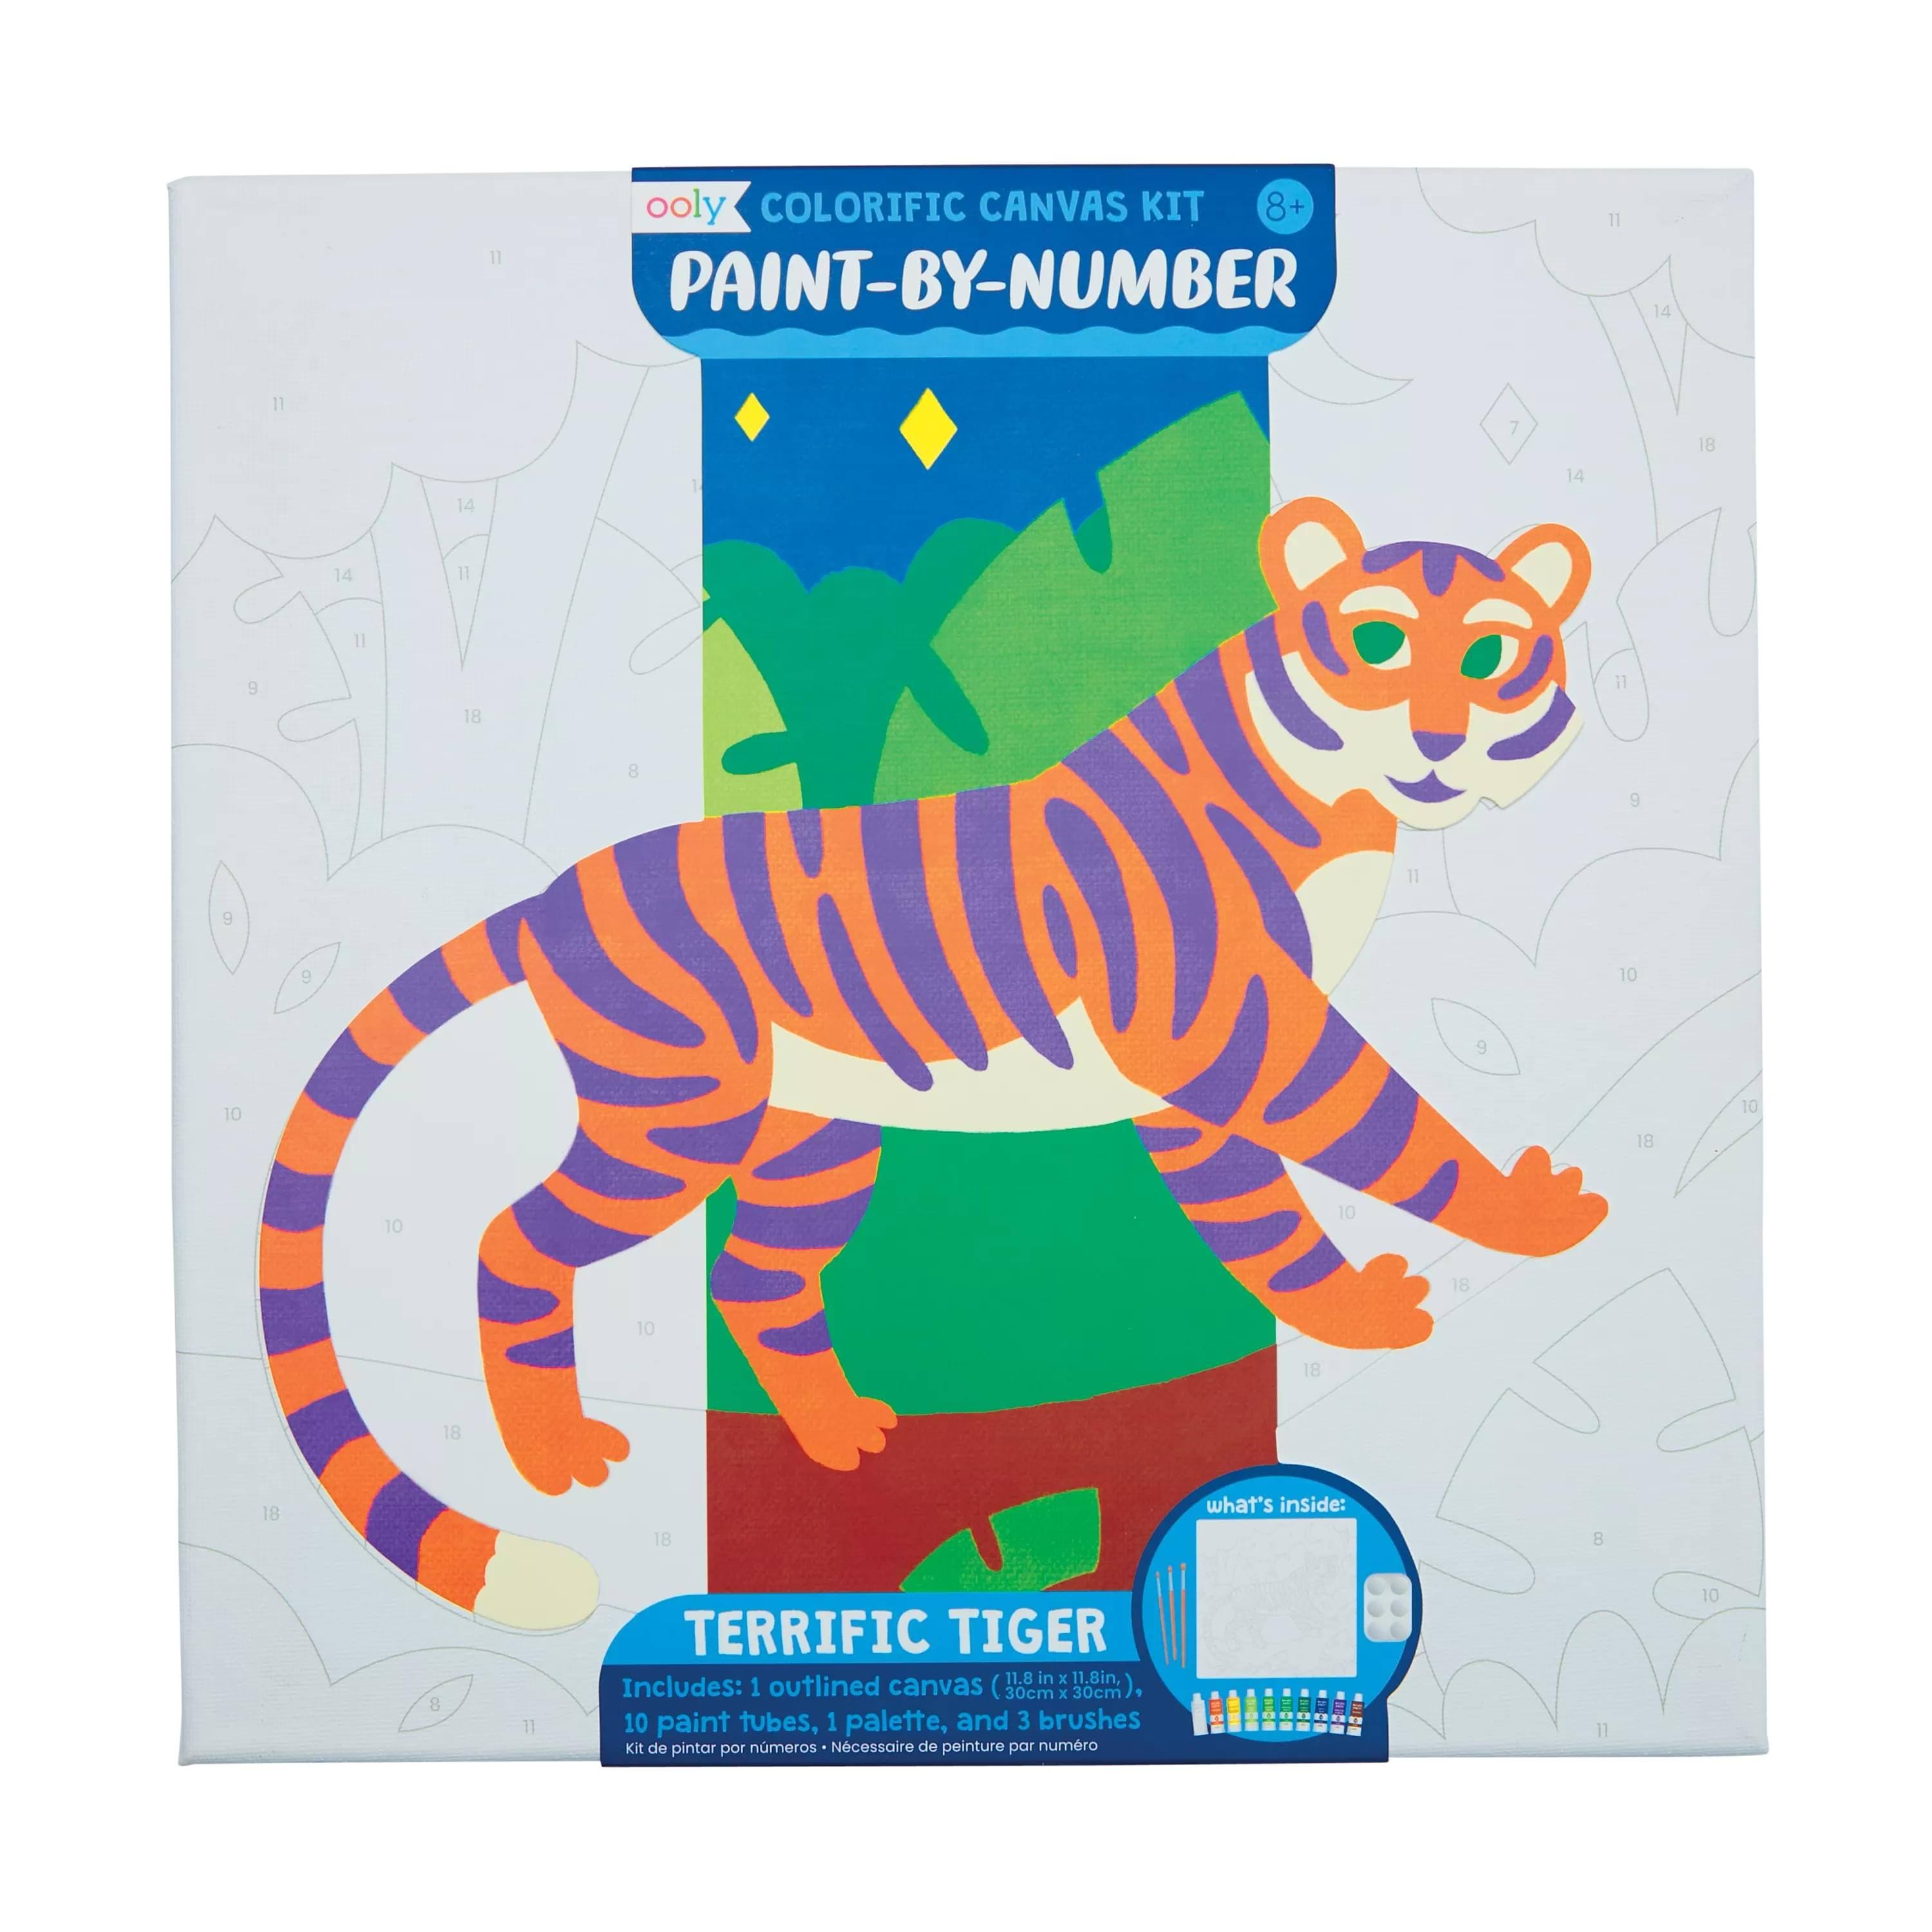 Colorific Canvas Kit Paint by Number - Terrific Tiger